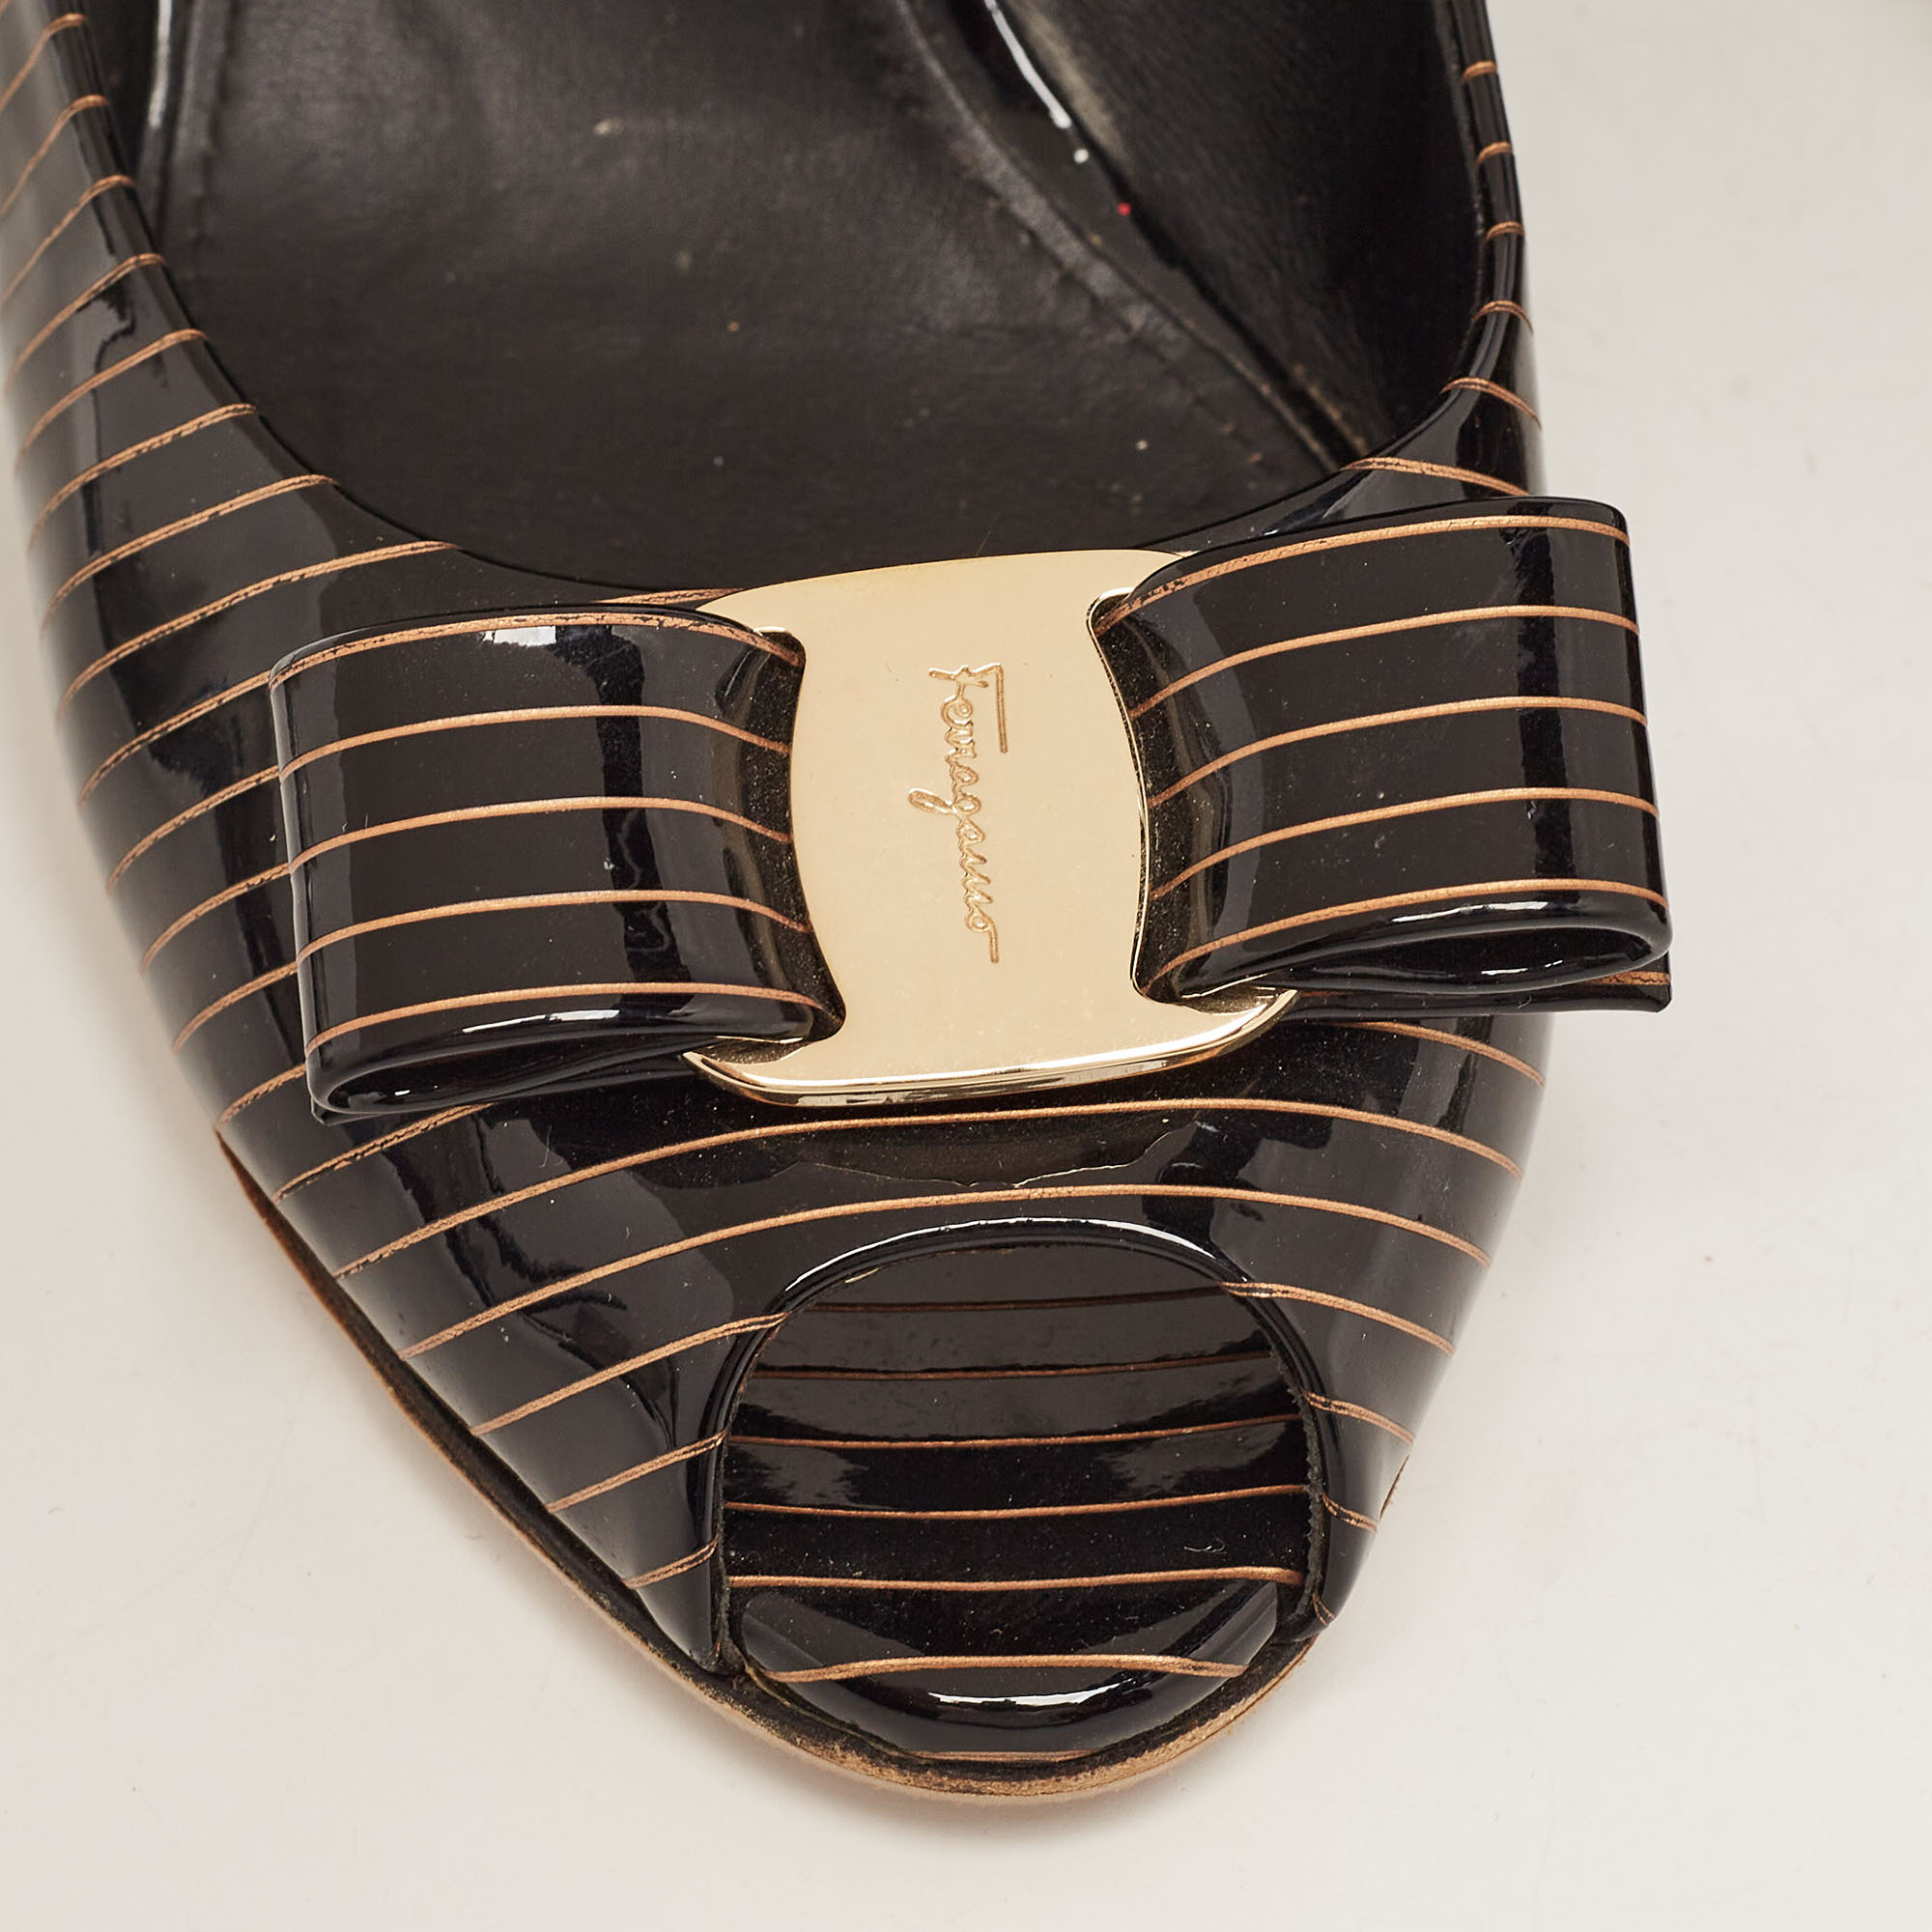 Salvatore Ferragamo Brown/Gold Patent Leather Vara Bow Pumps Size 39.5